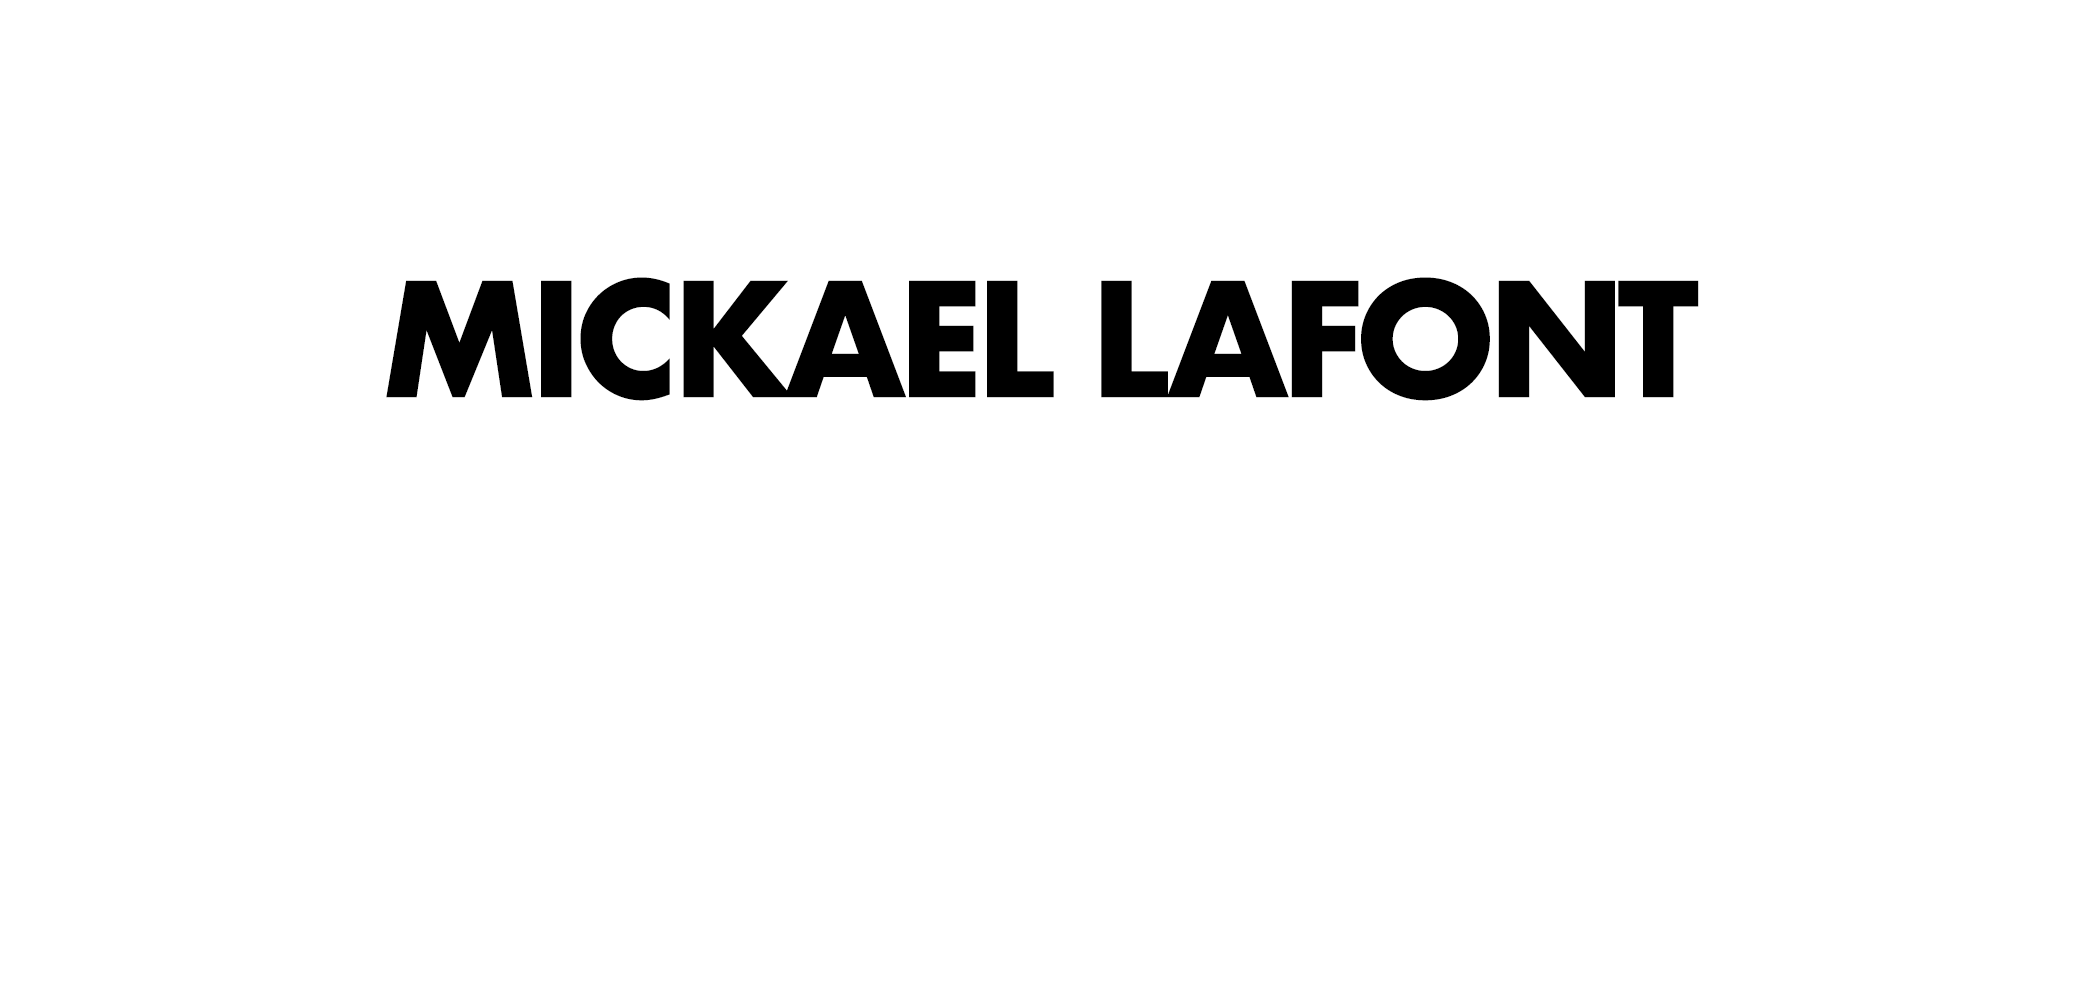 MICKAEL LAFONT